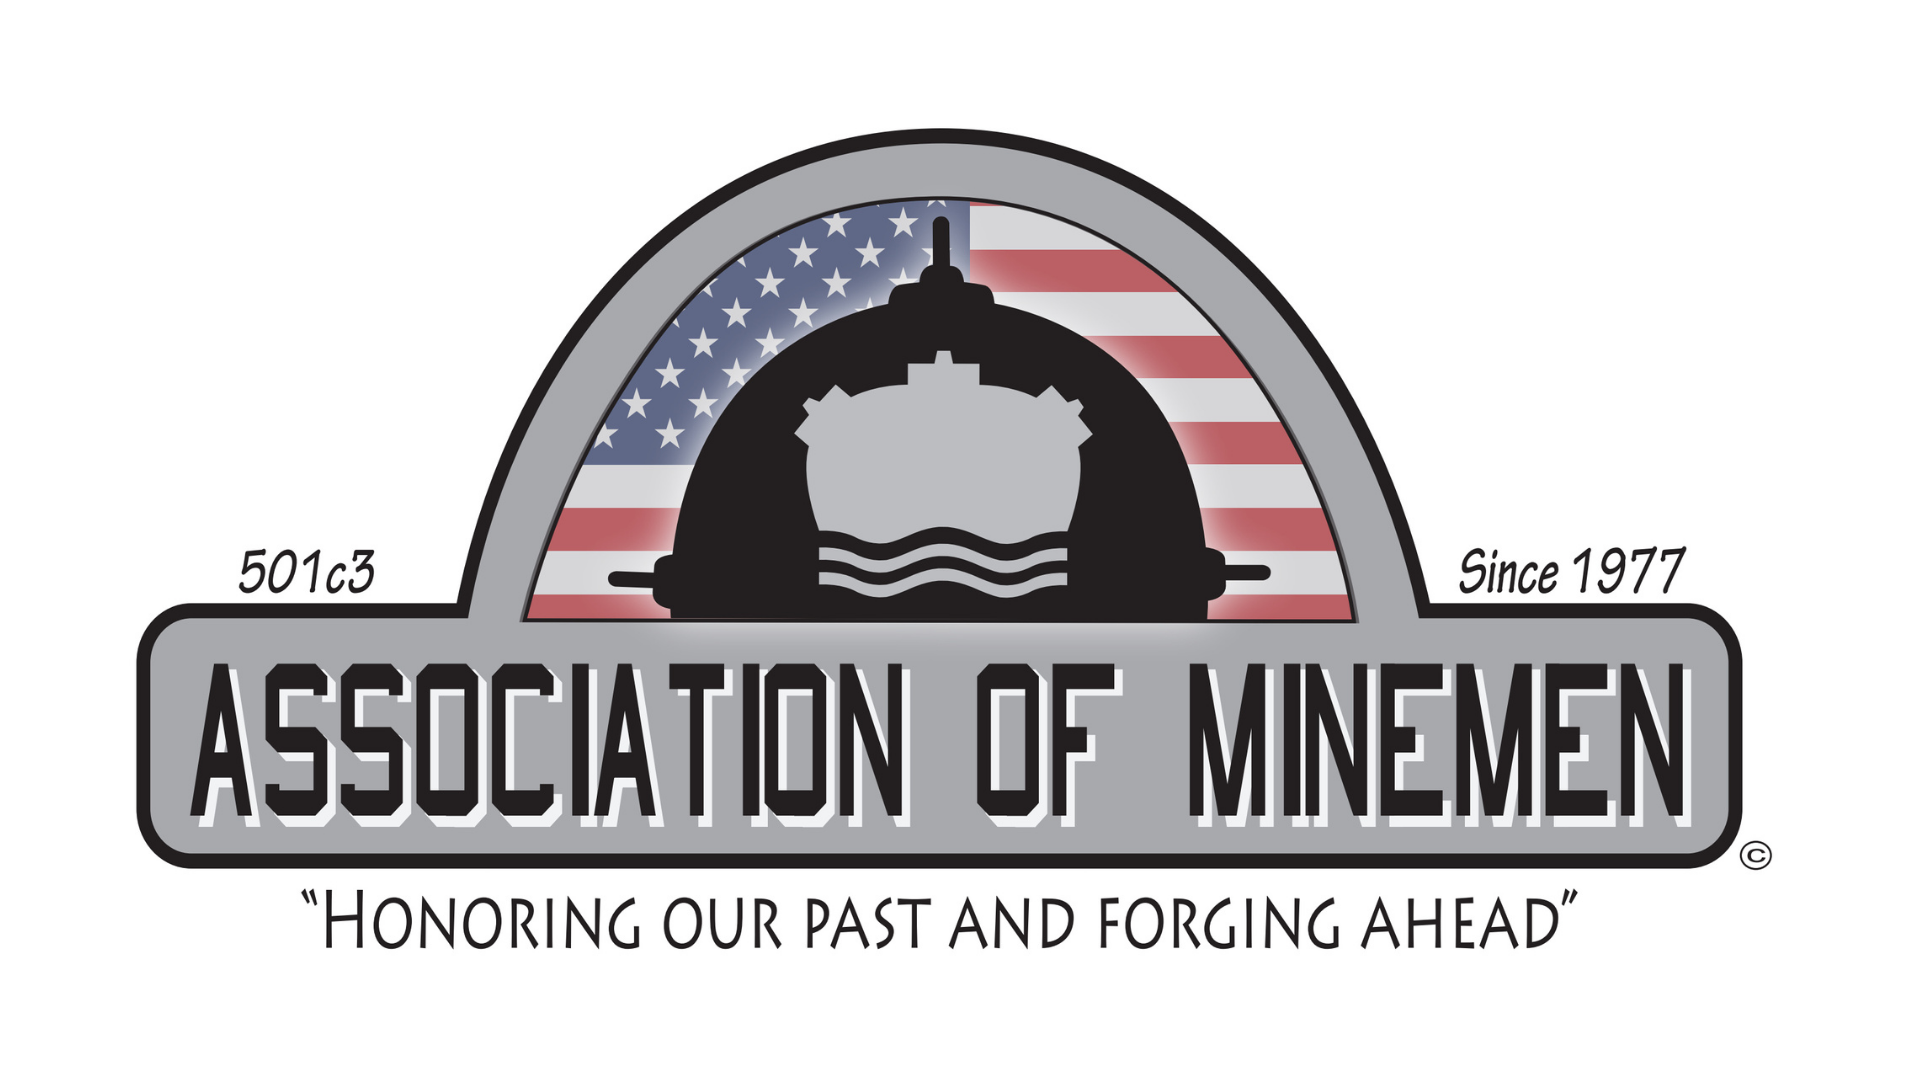 Contact Association of Minemen